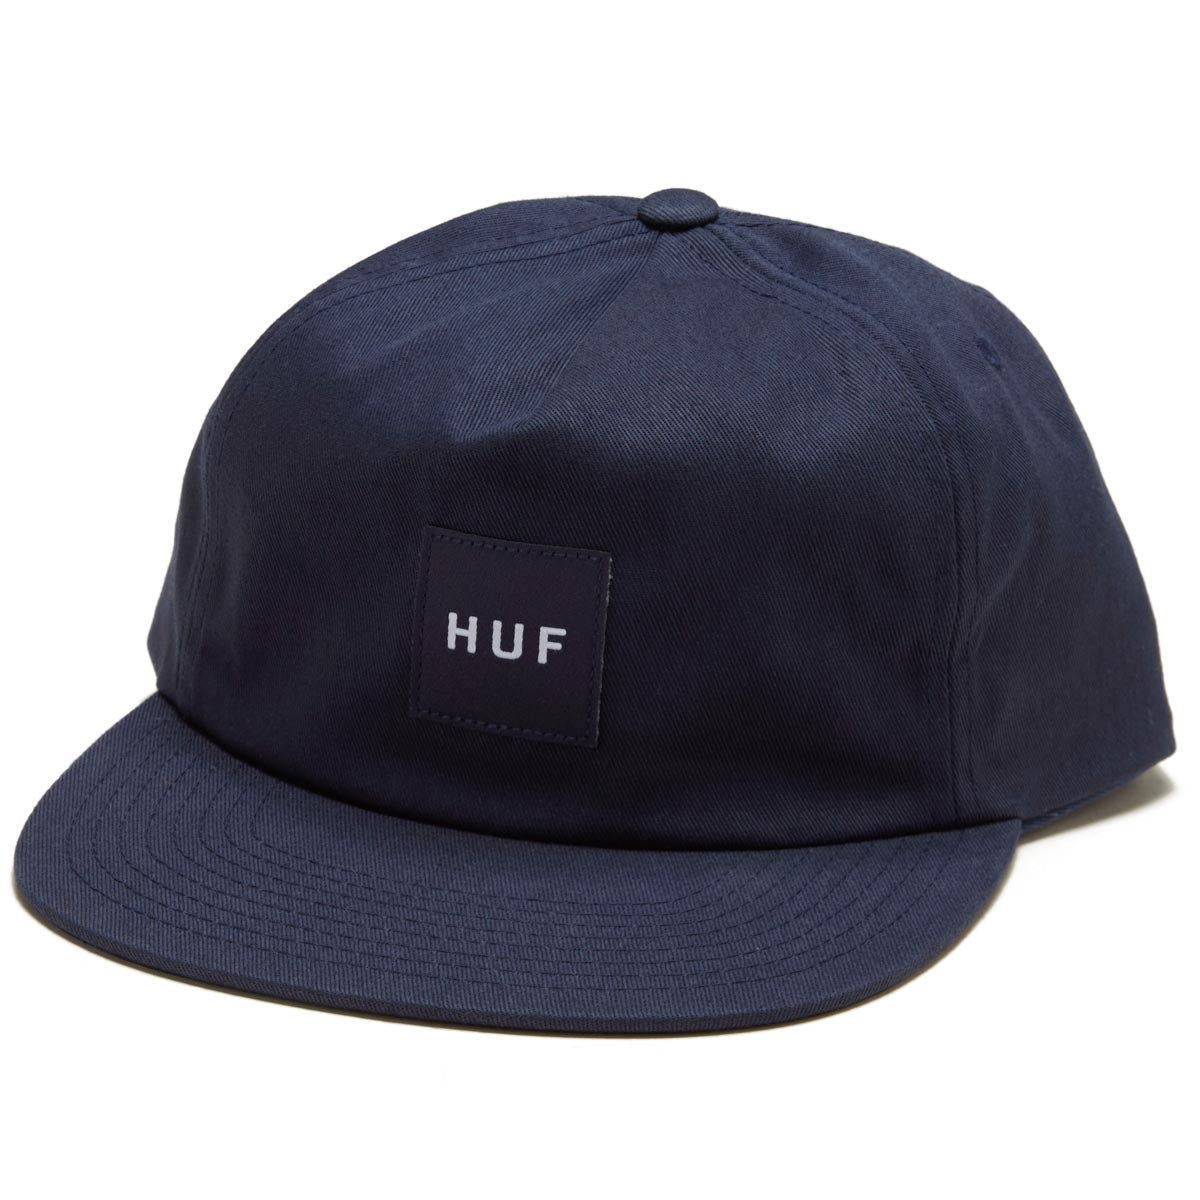 HUF Set Box Snapback Hat - Navy image 1